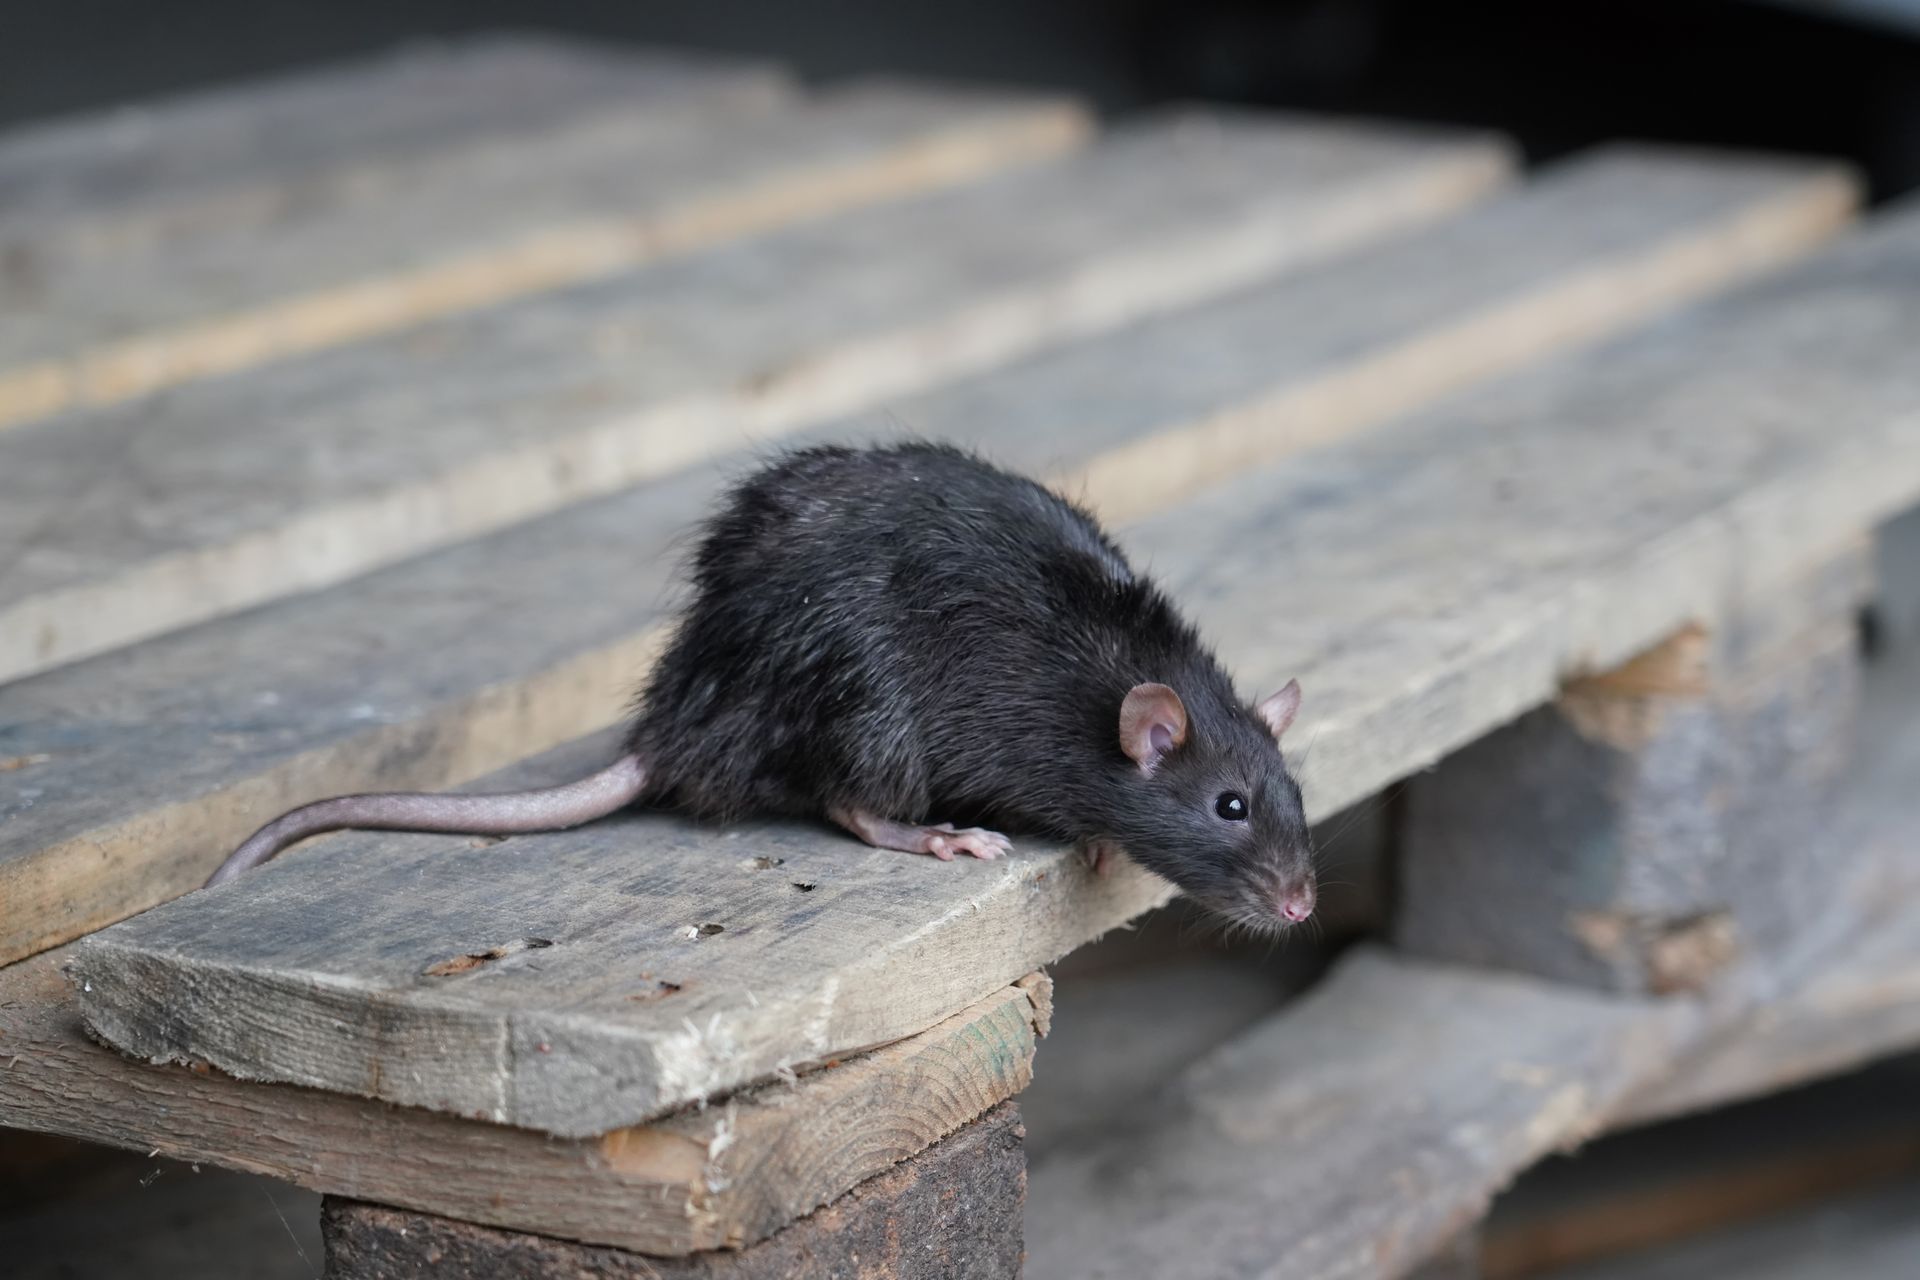 a rat on a wooden deck